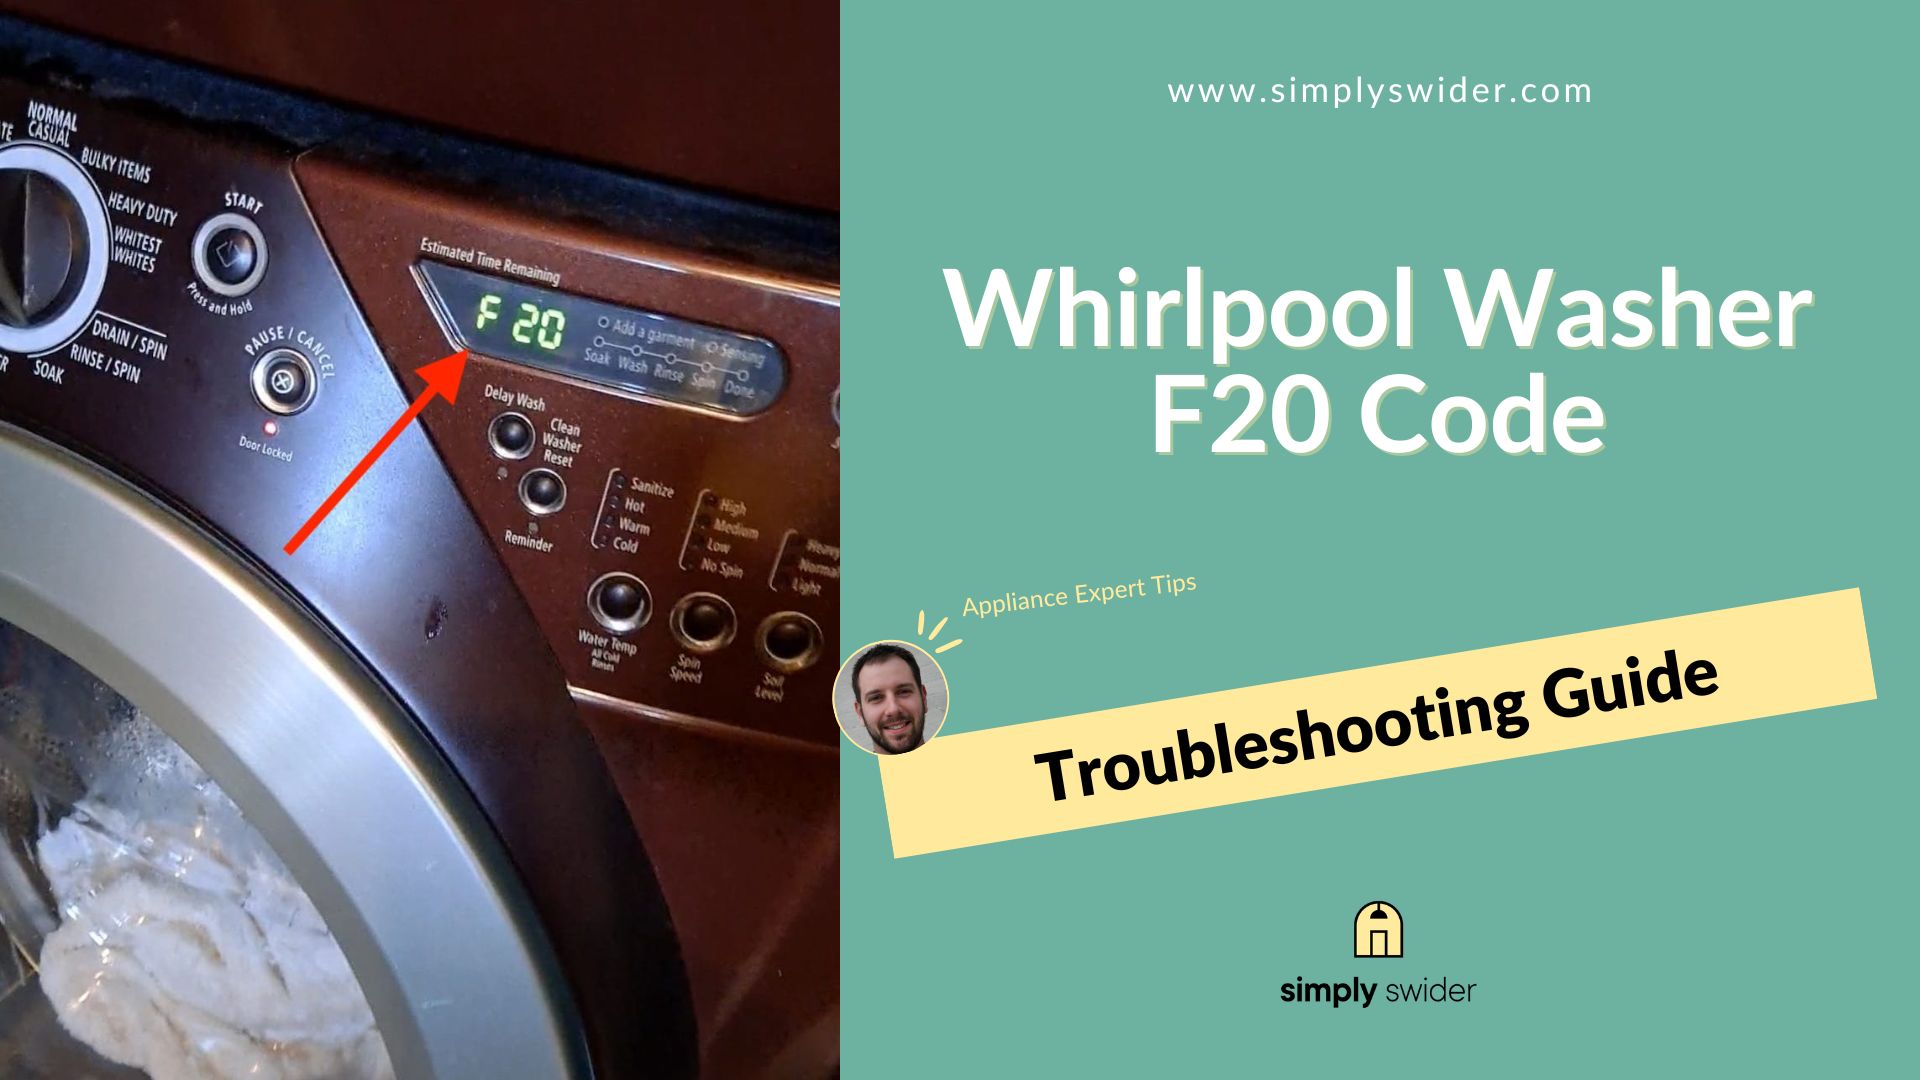 Whirlpool Washer F20 Code